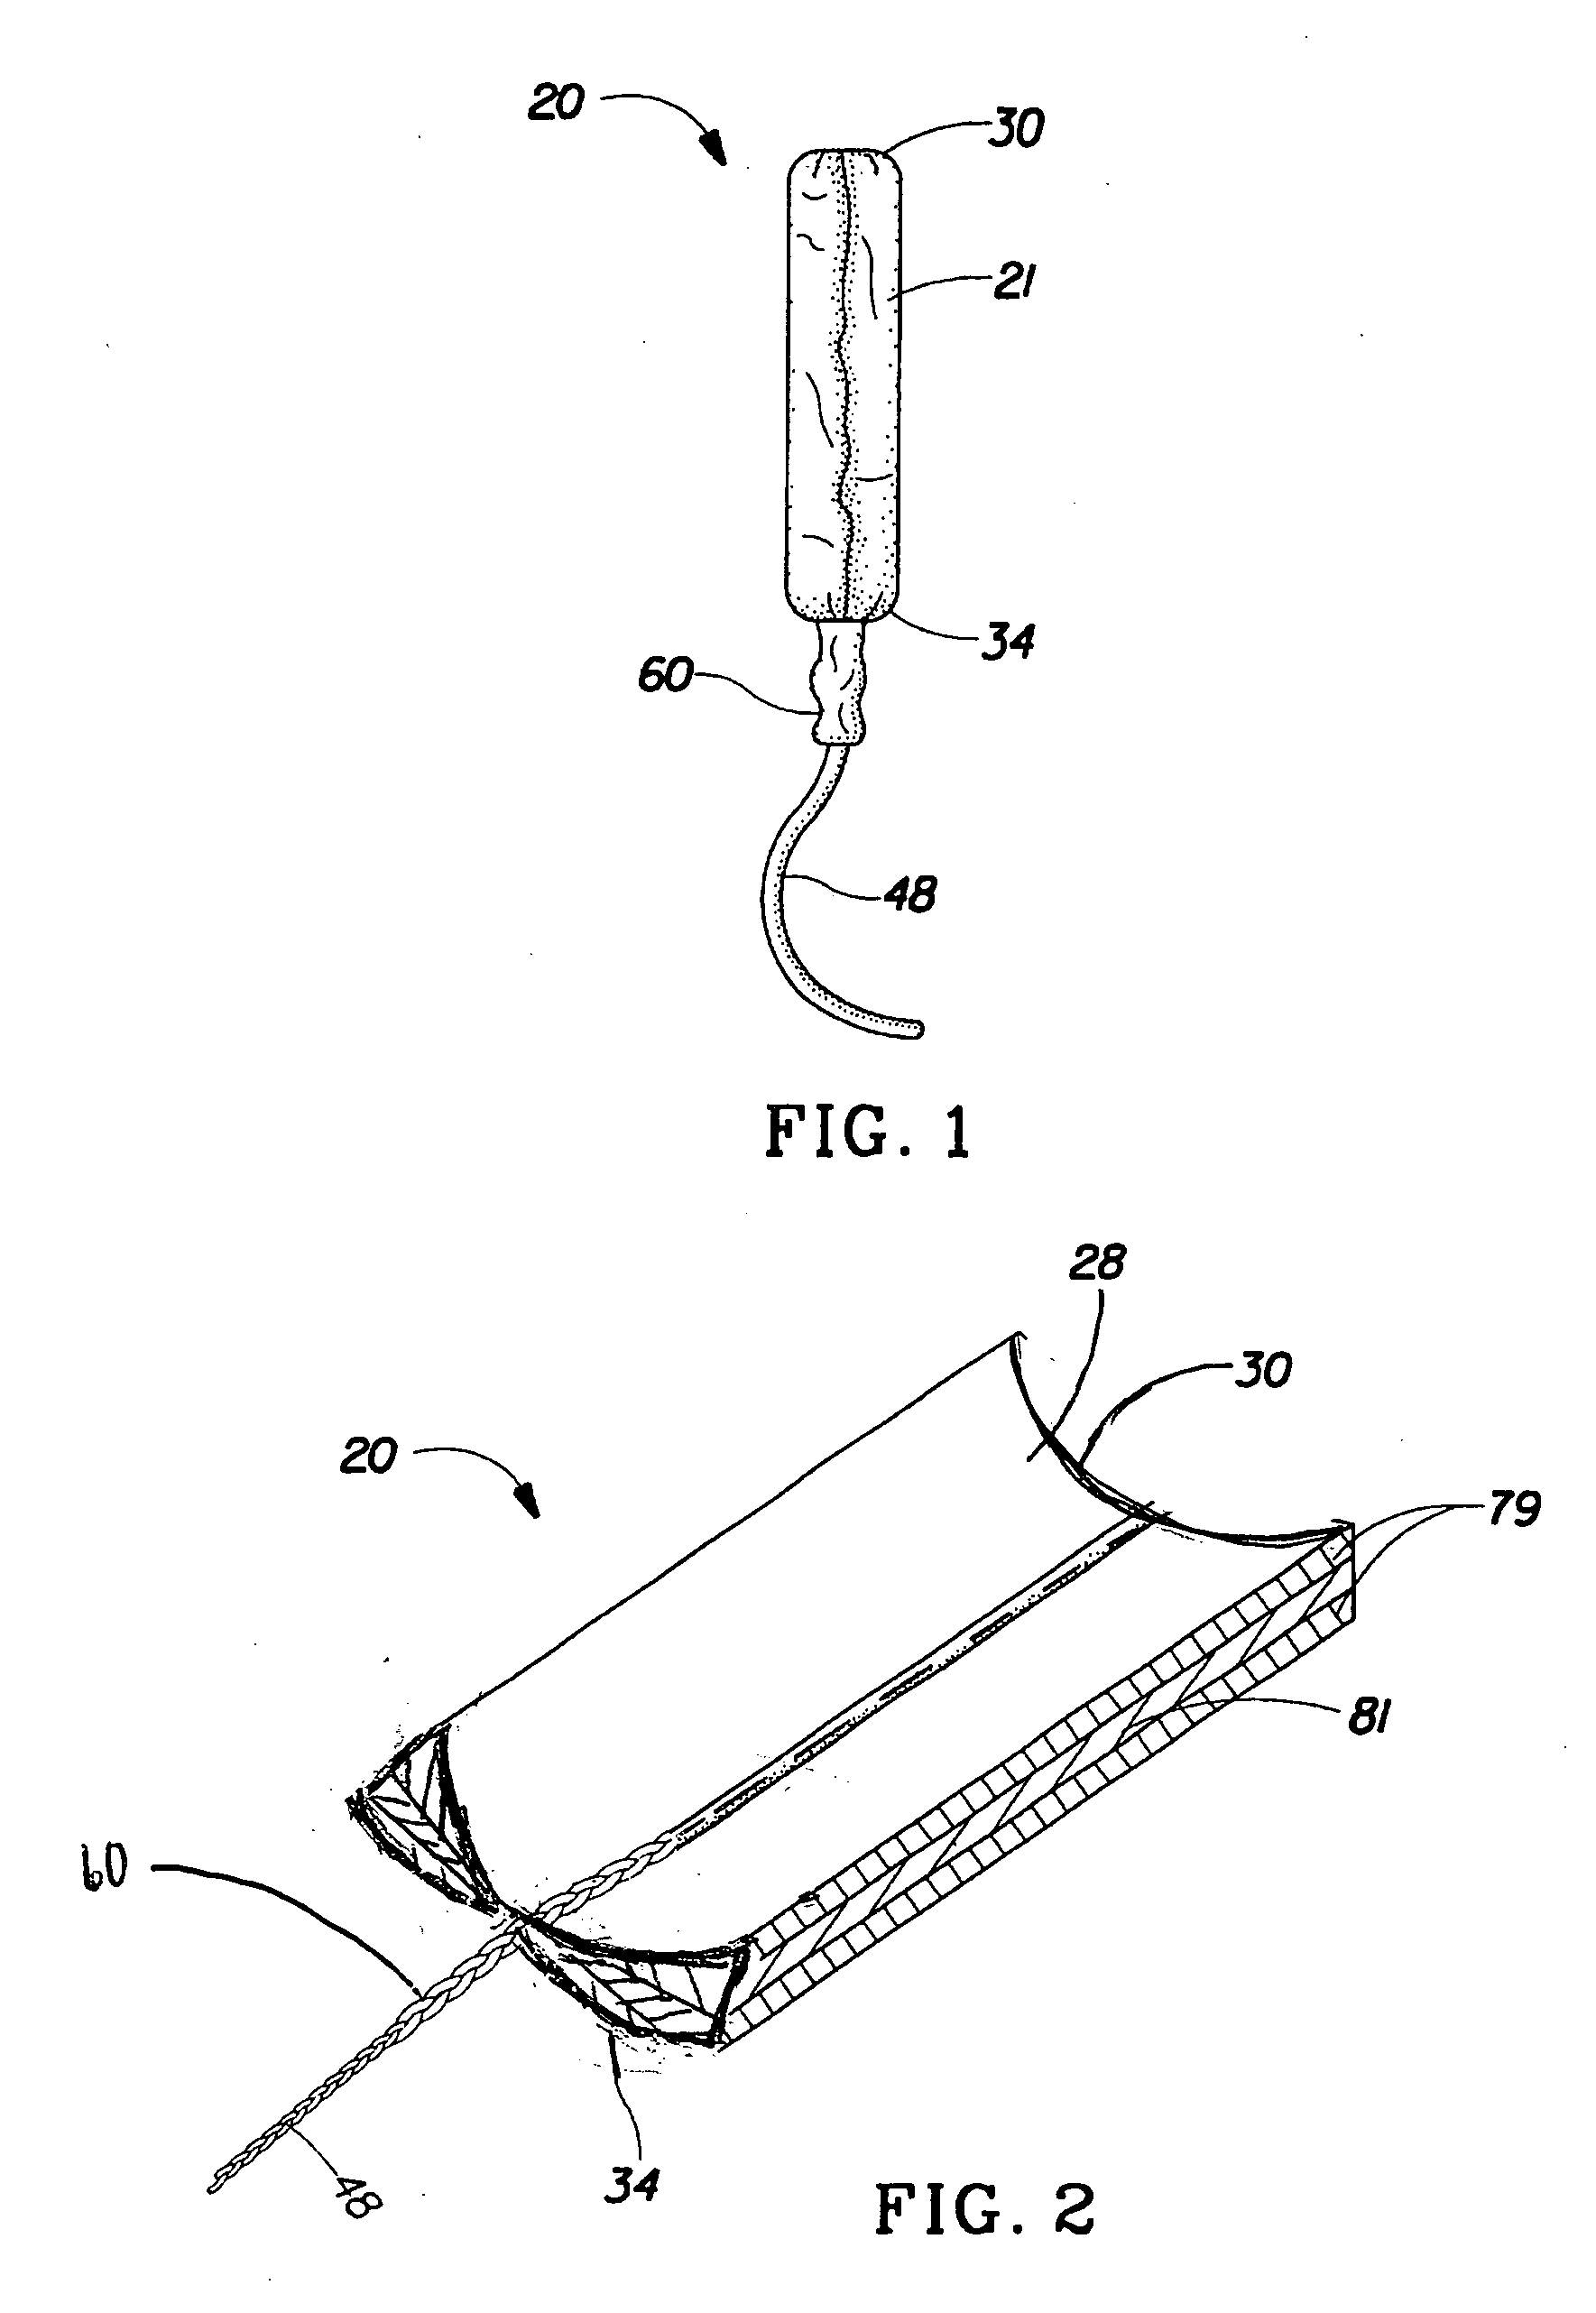 Absorbent tampon comprising a visually distinct withdrawal member